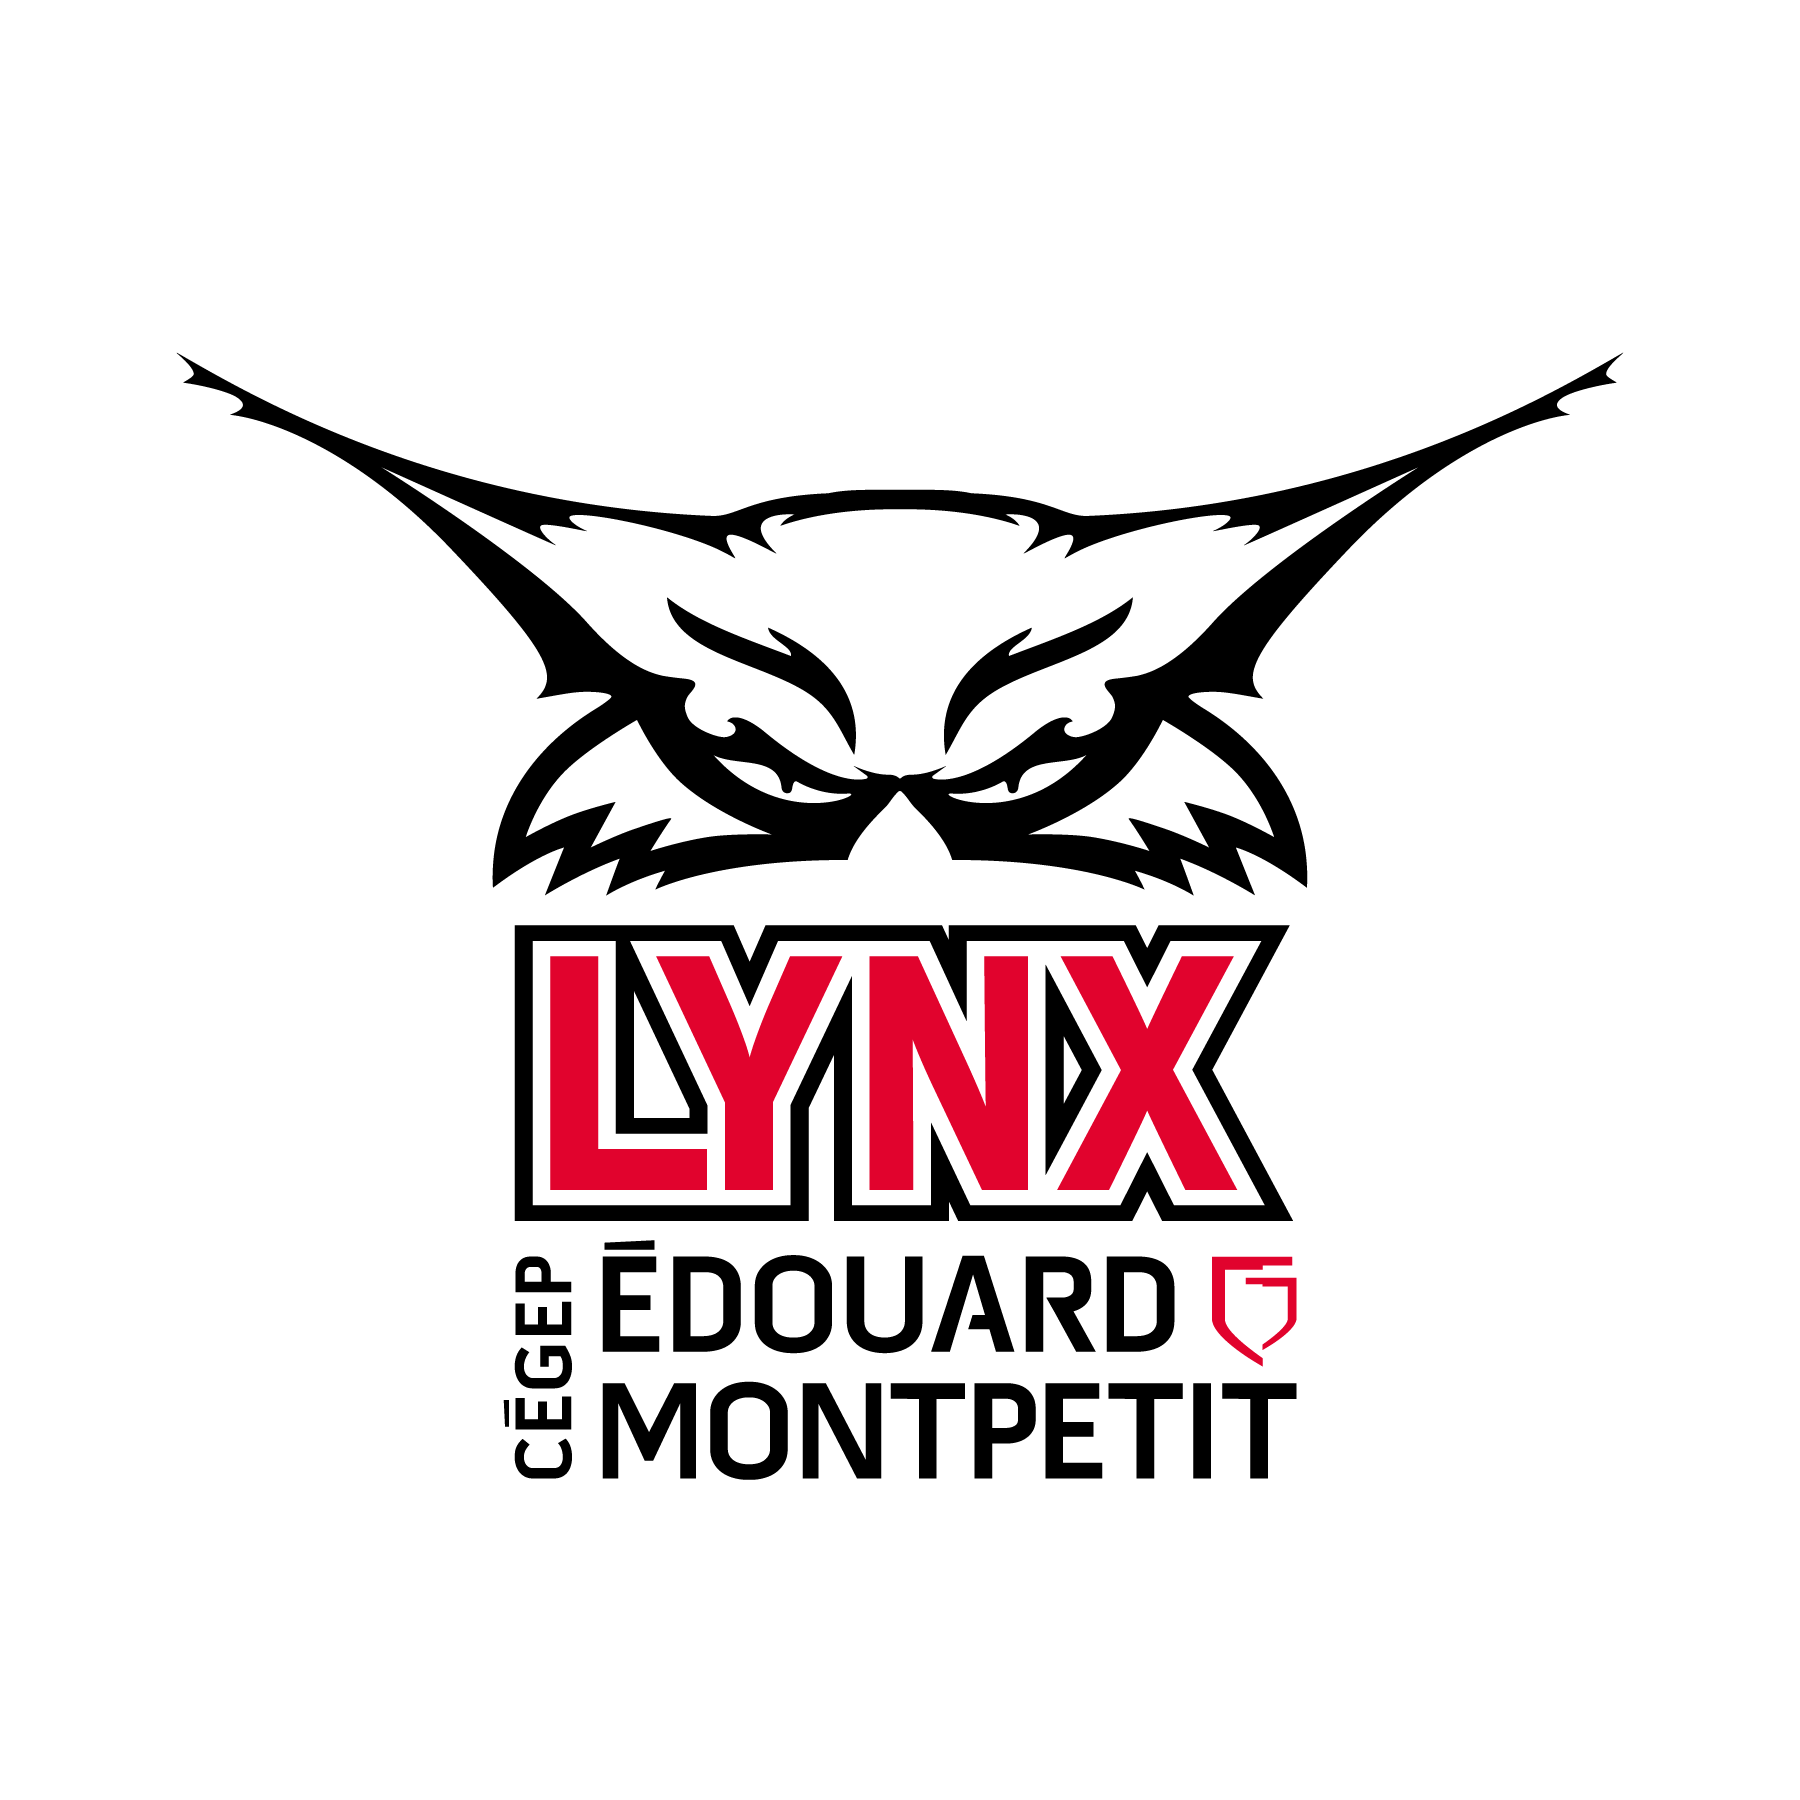 Équipe de cheerleading collégial des Lynx